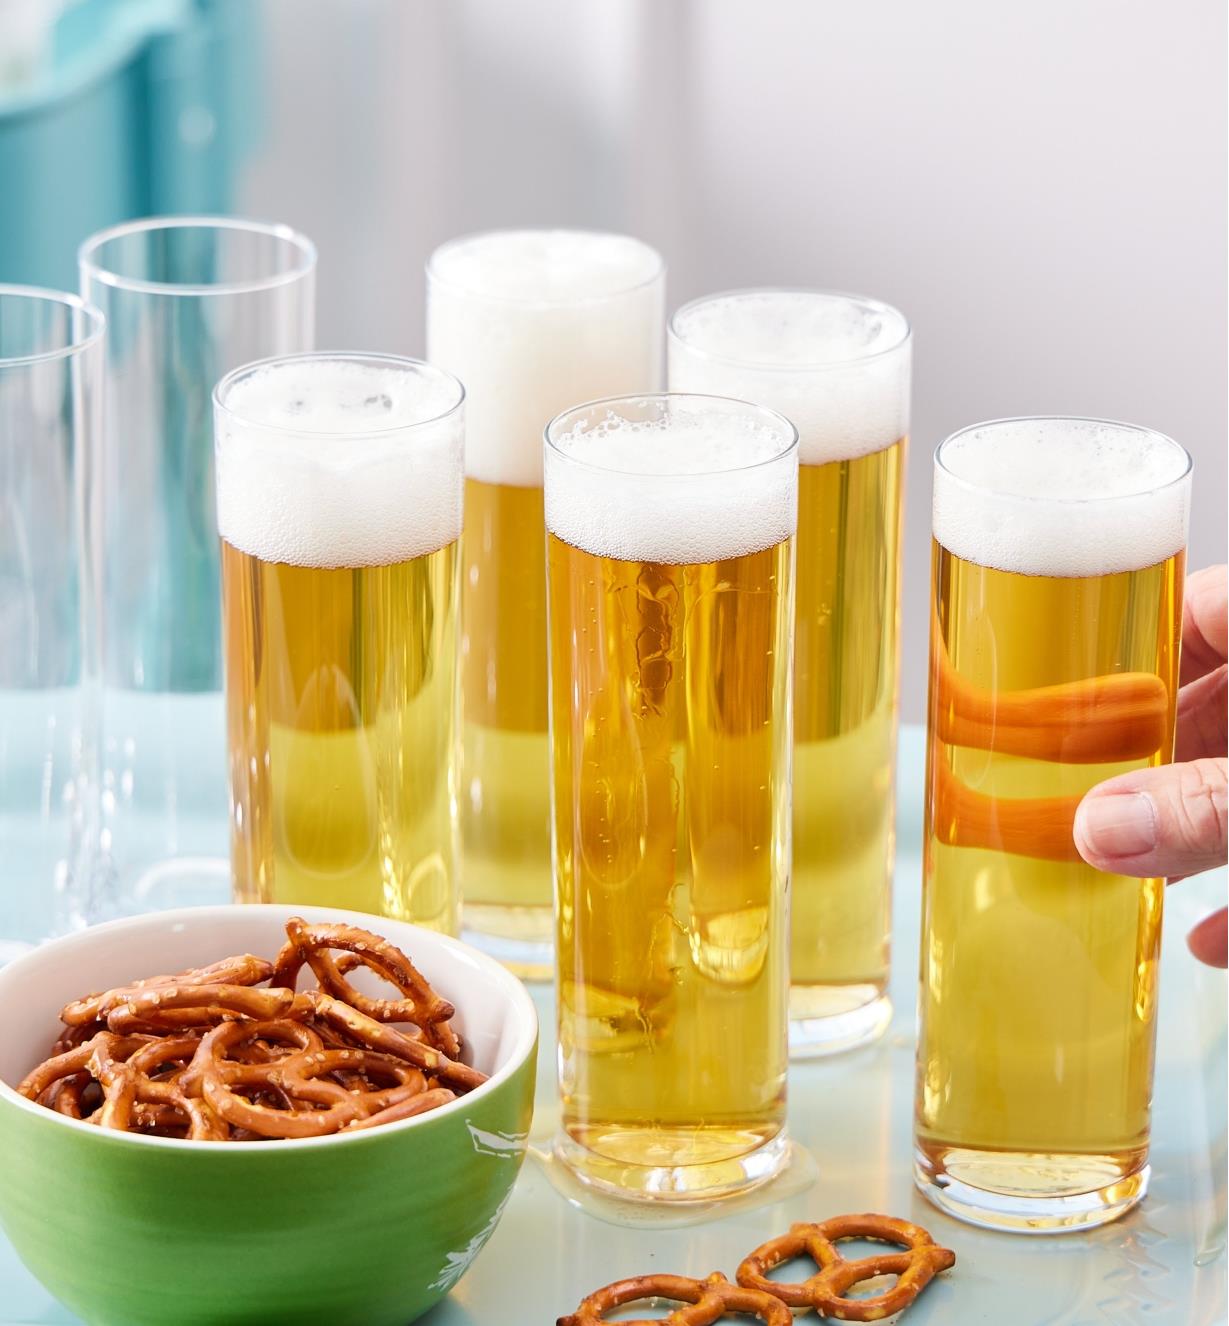 Cinq verres Kölsch remplis de bière à côté d’un bol de bretzels